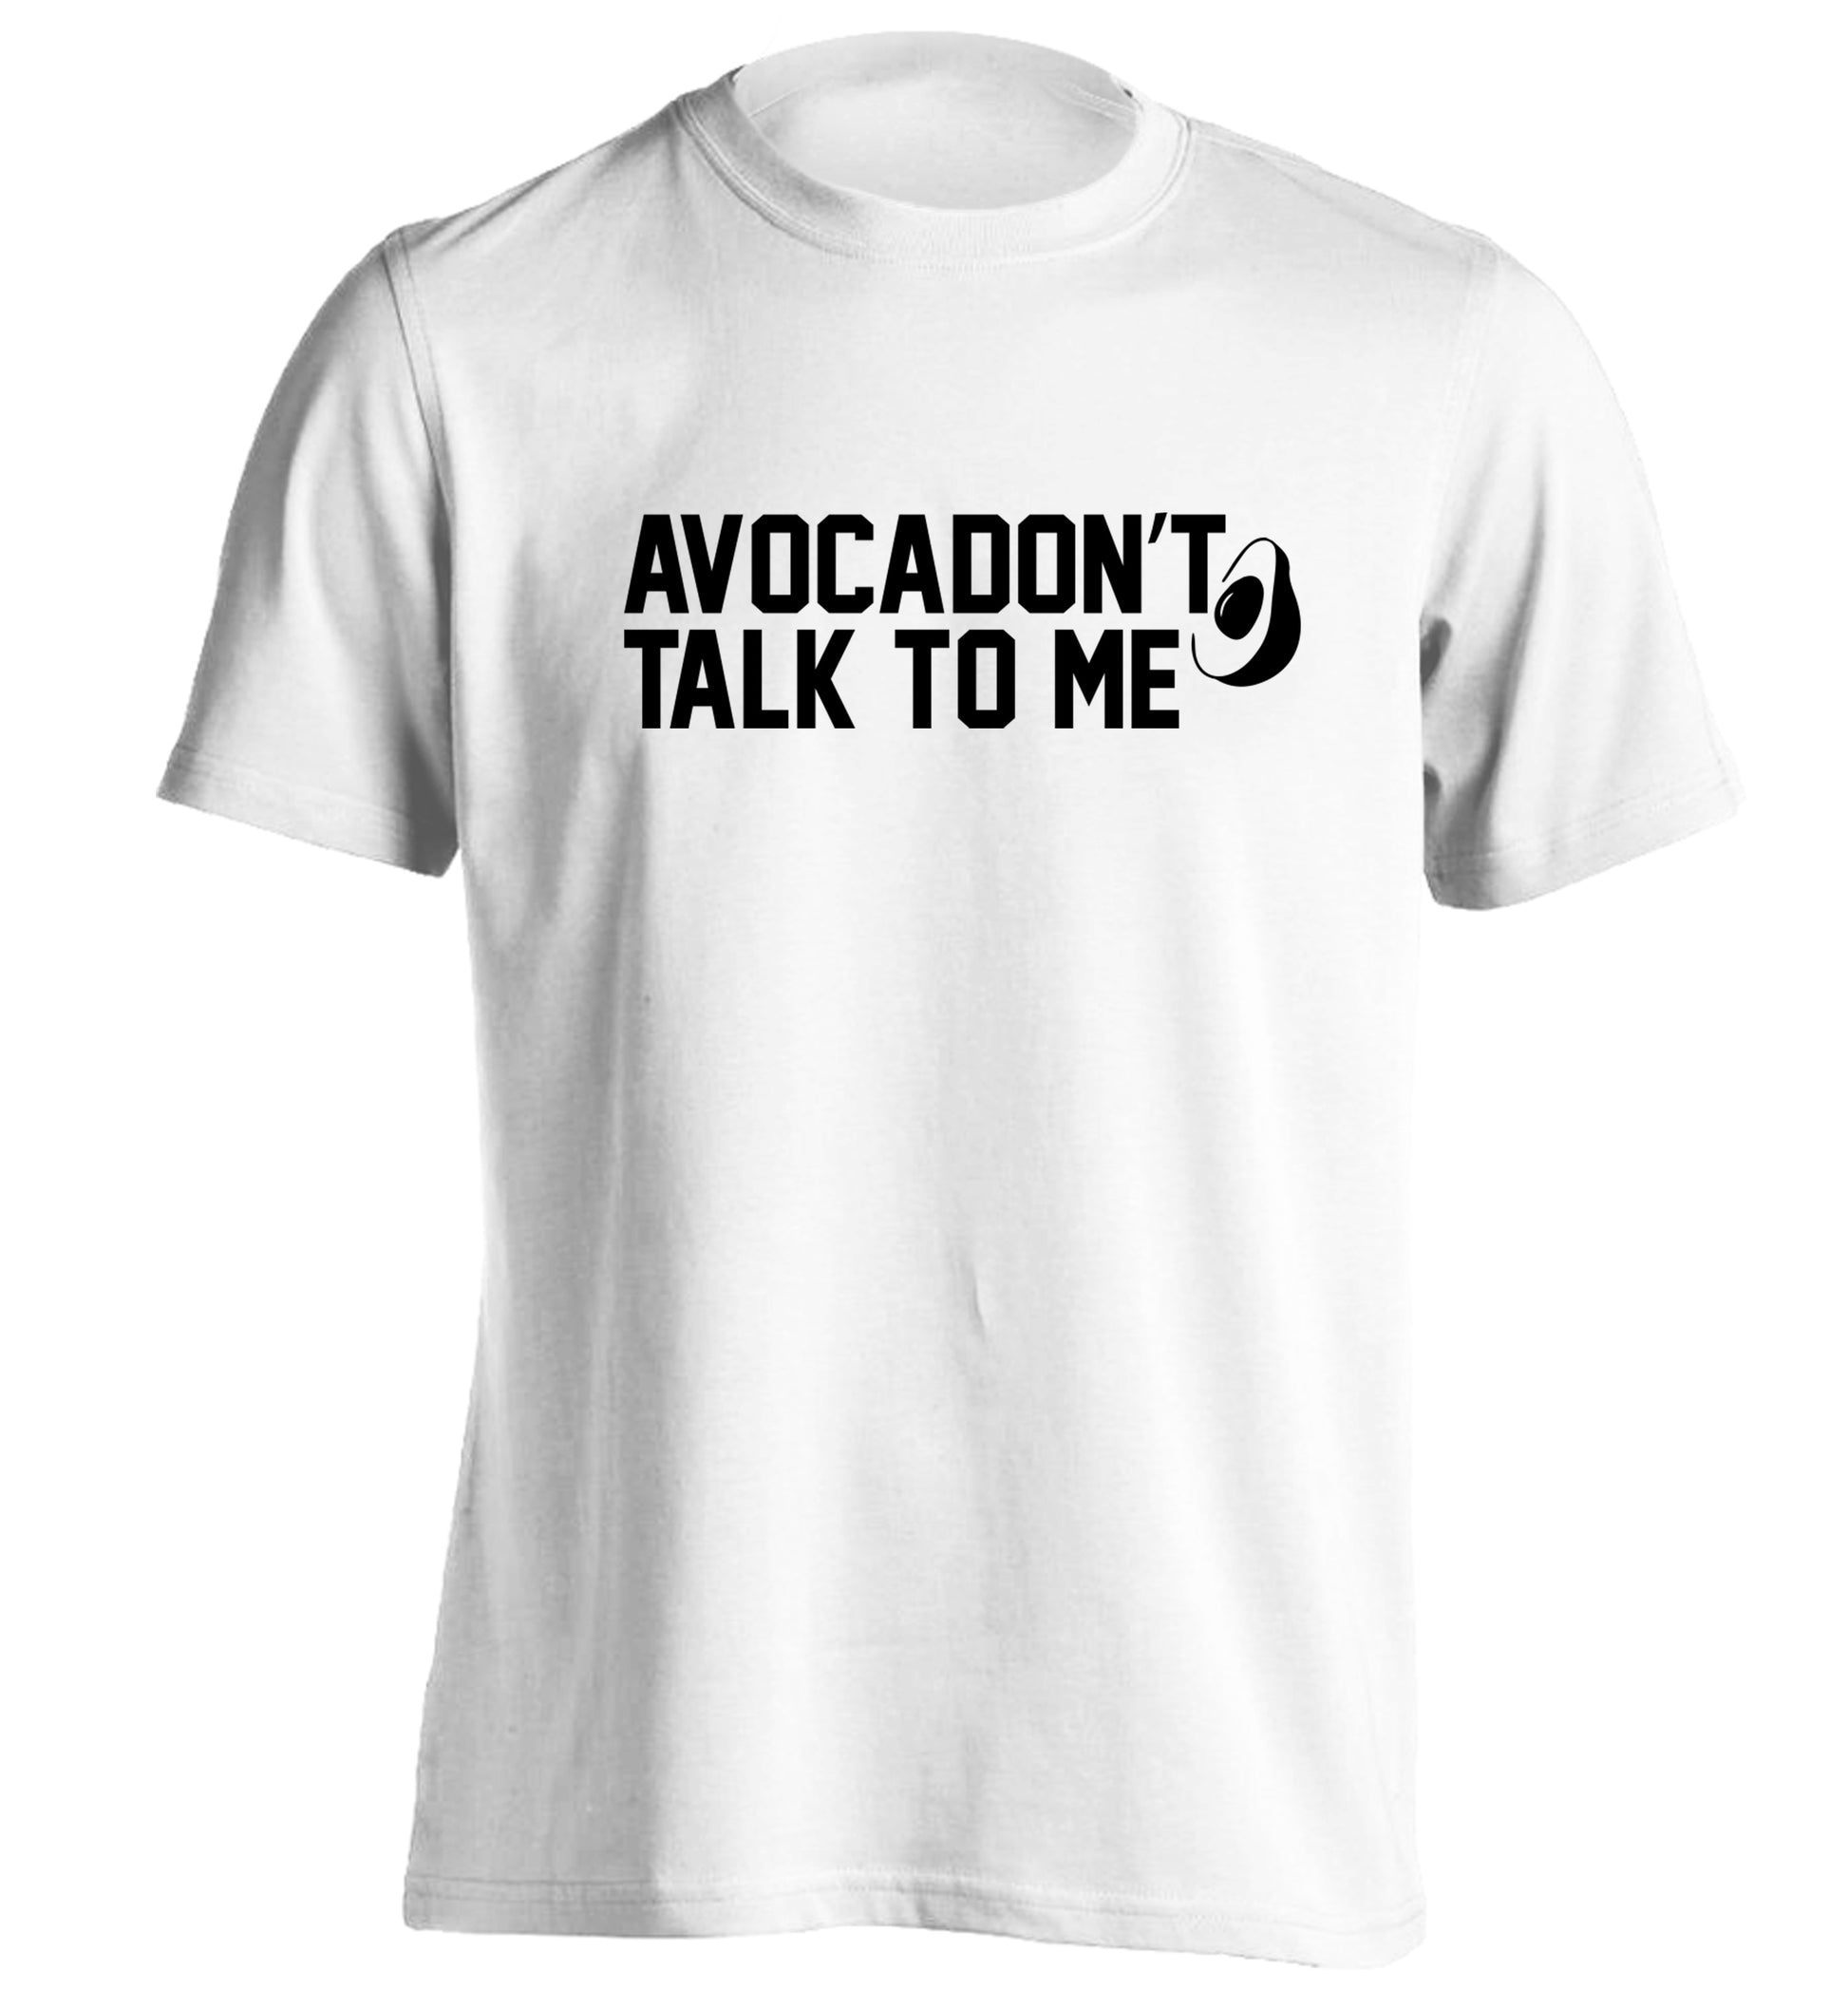 Avocadon't talk to me adults unisex white Tshirt 2XL